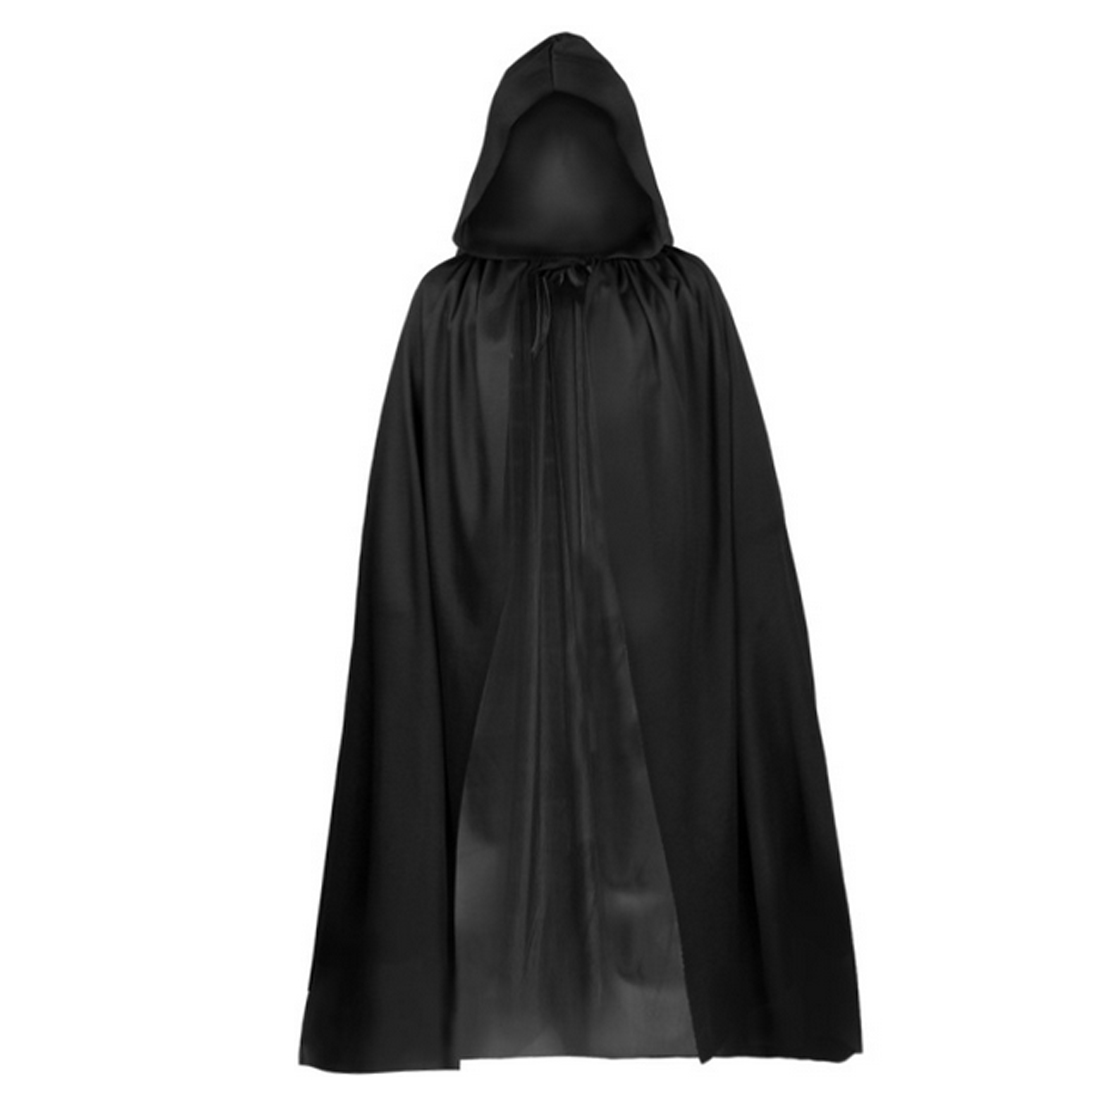 Black Long Wicca Robe Hooded Cloak Cape Wedding Halloween Coat Costumes ...